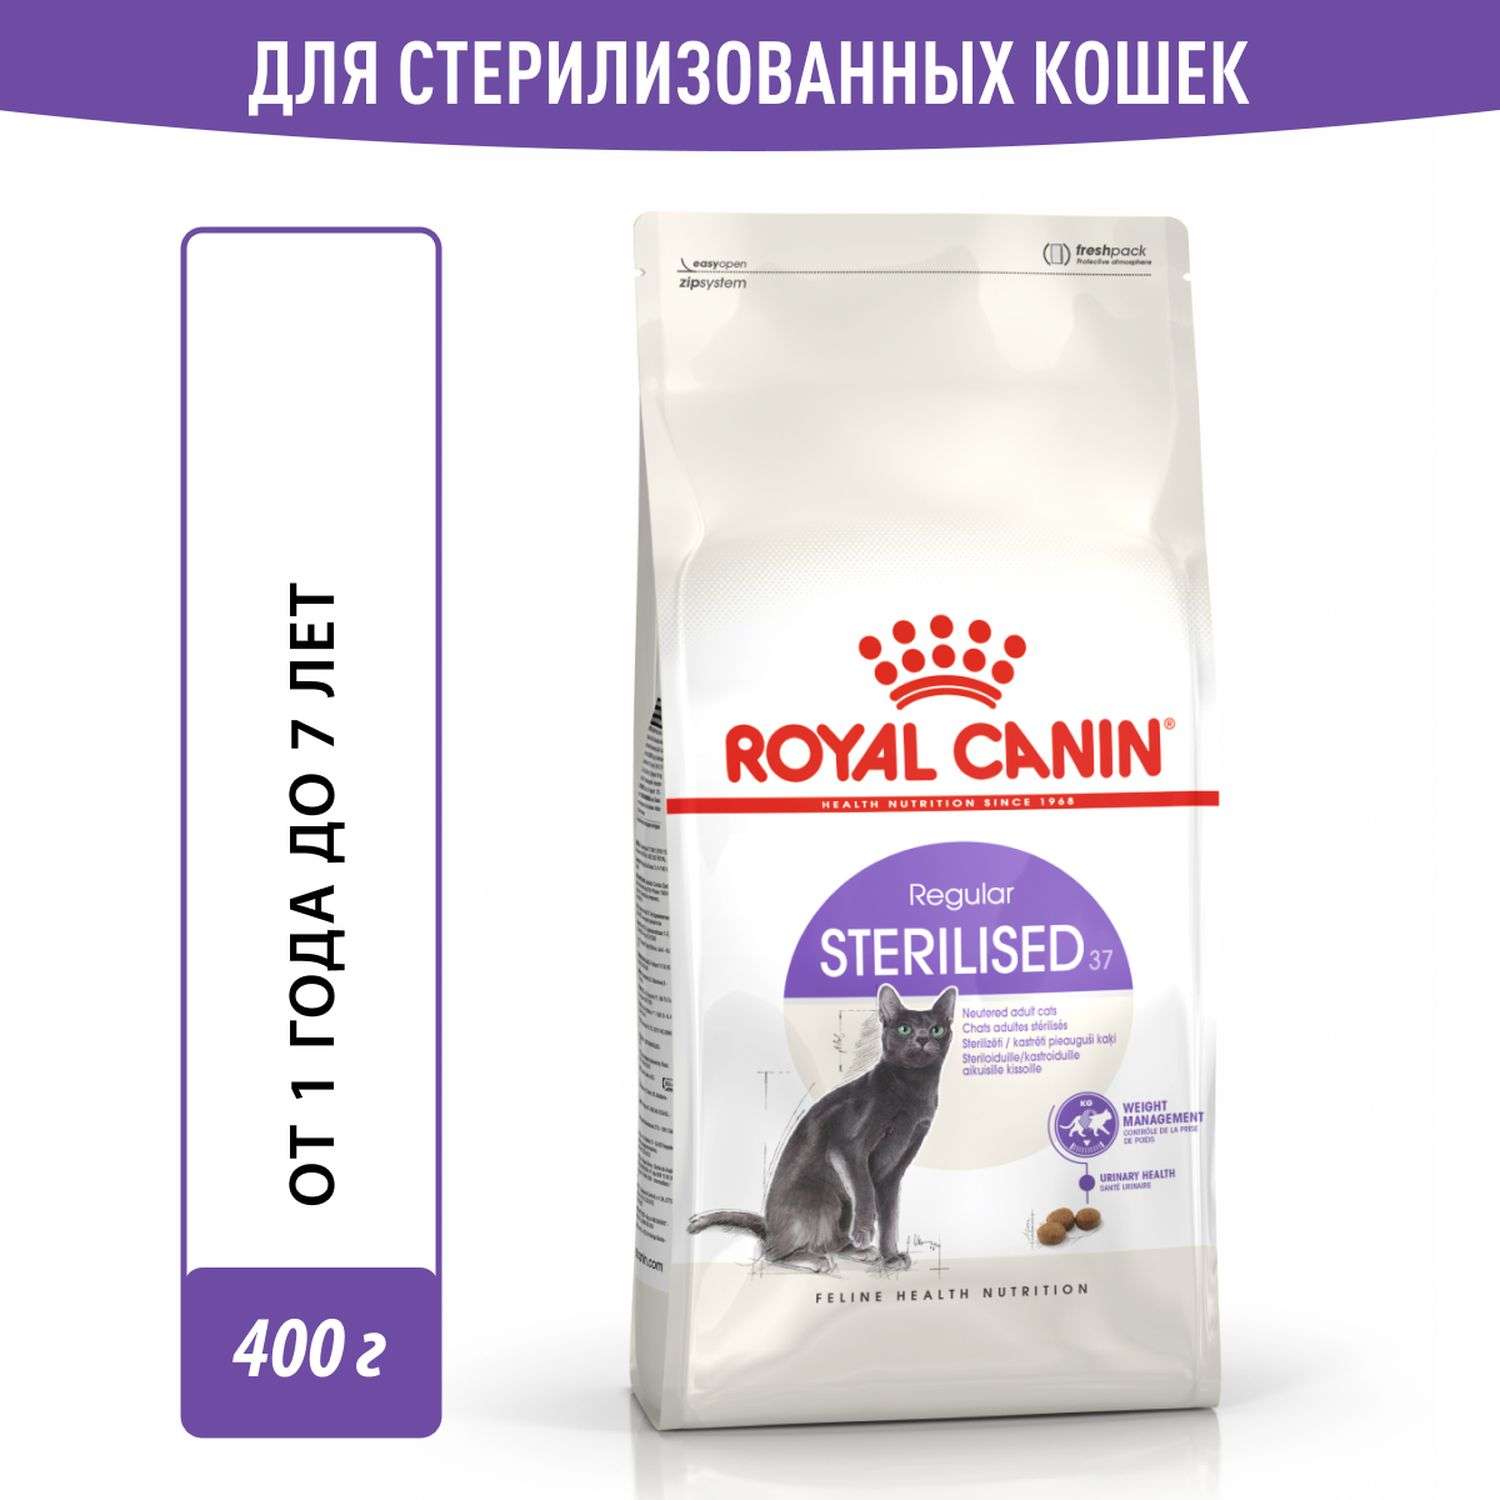 Корм сухой ROYAL CANIN Sterilised 37 400г для стерилизованных кошек - фото 1